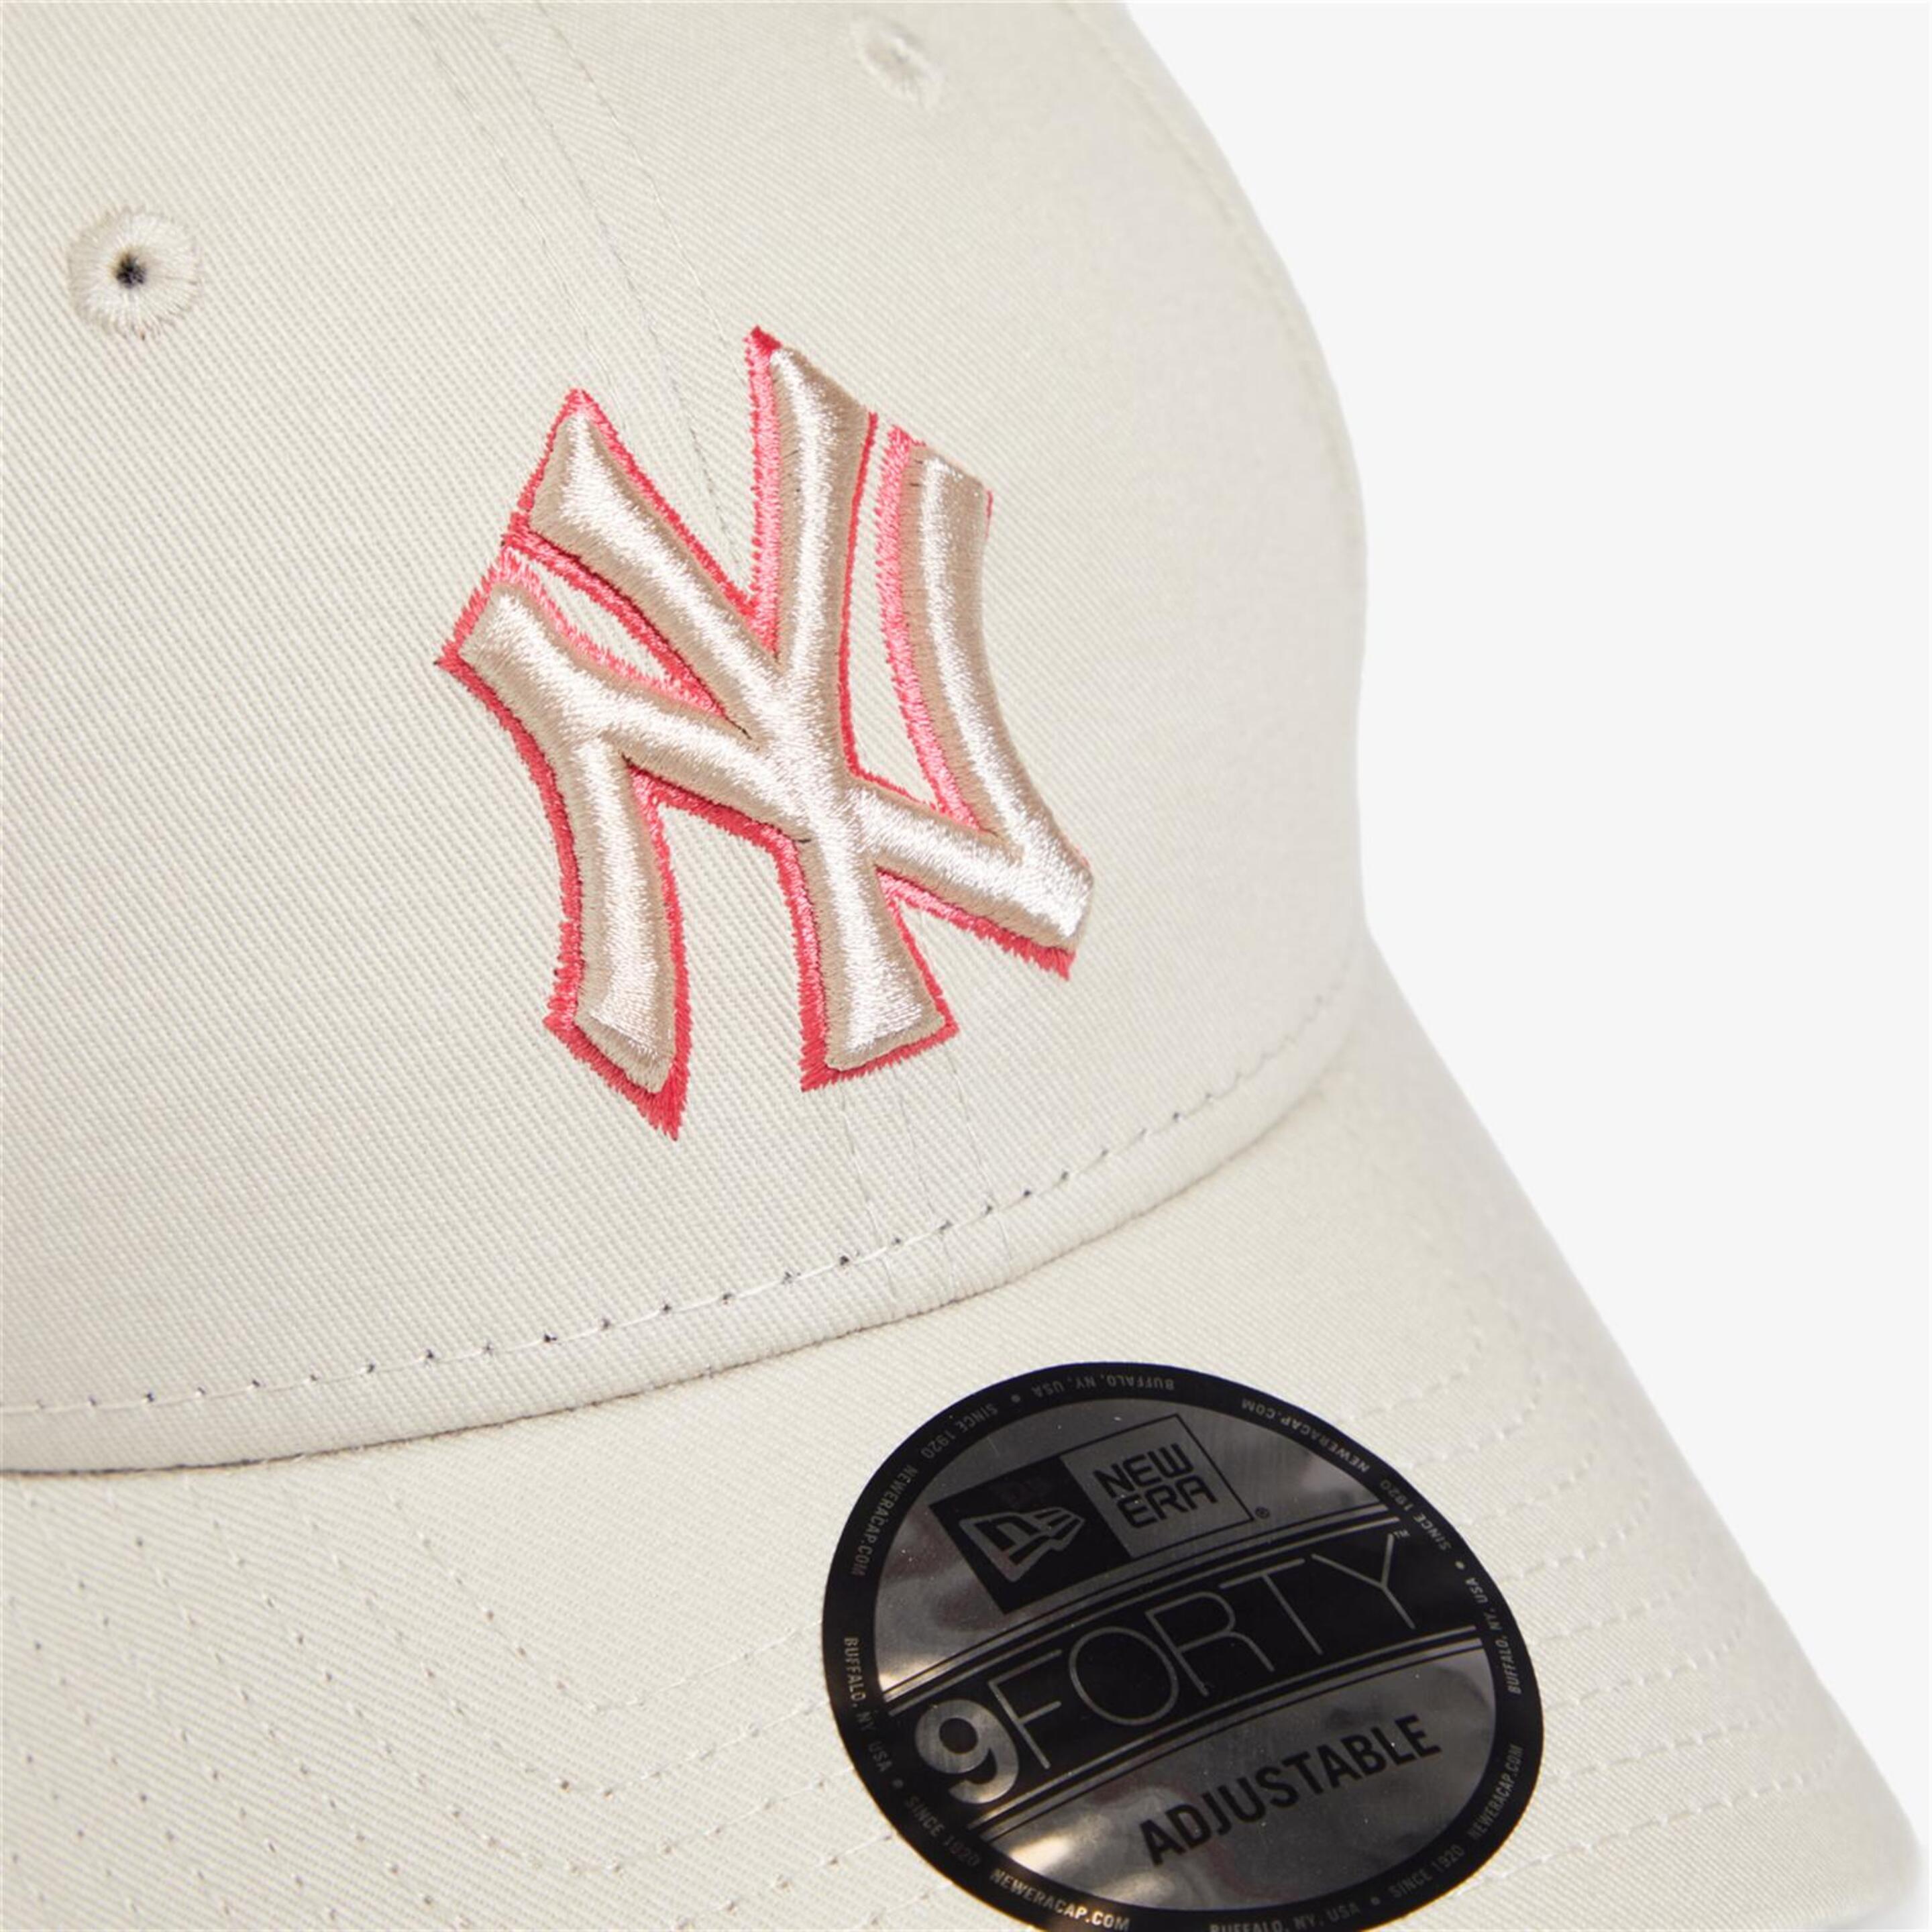 New Era NY Yankees - Beige - Gorra